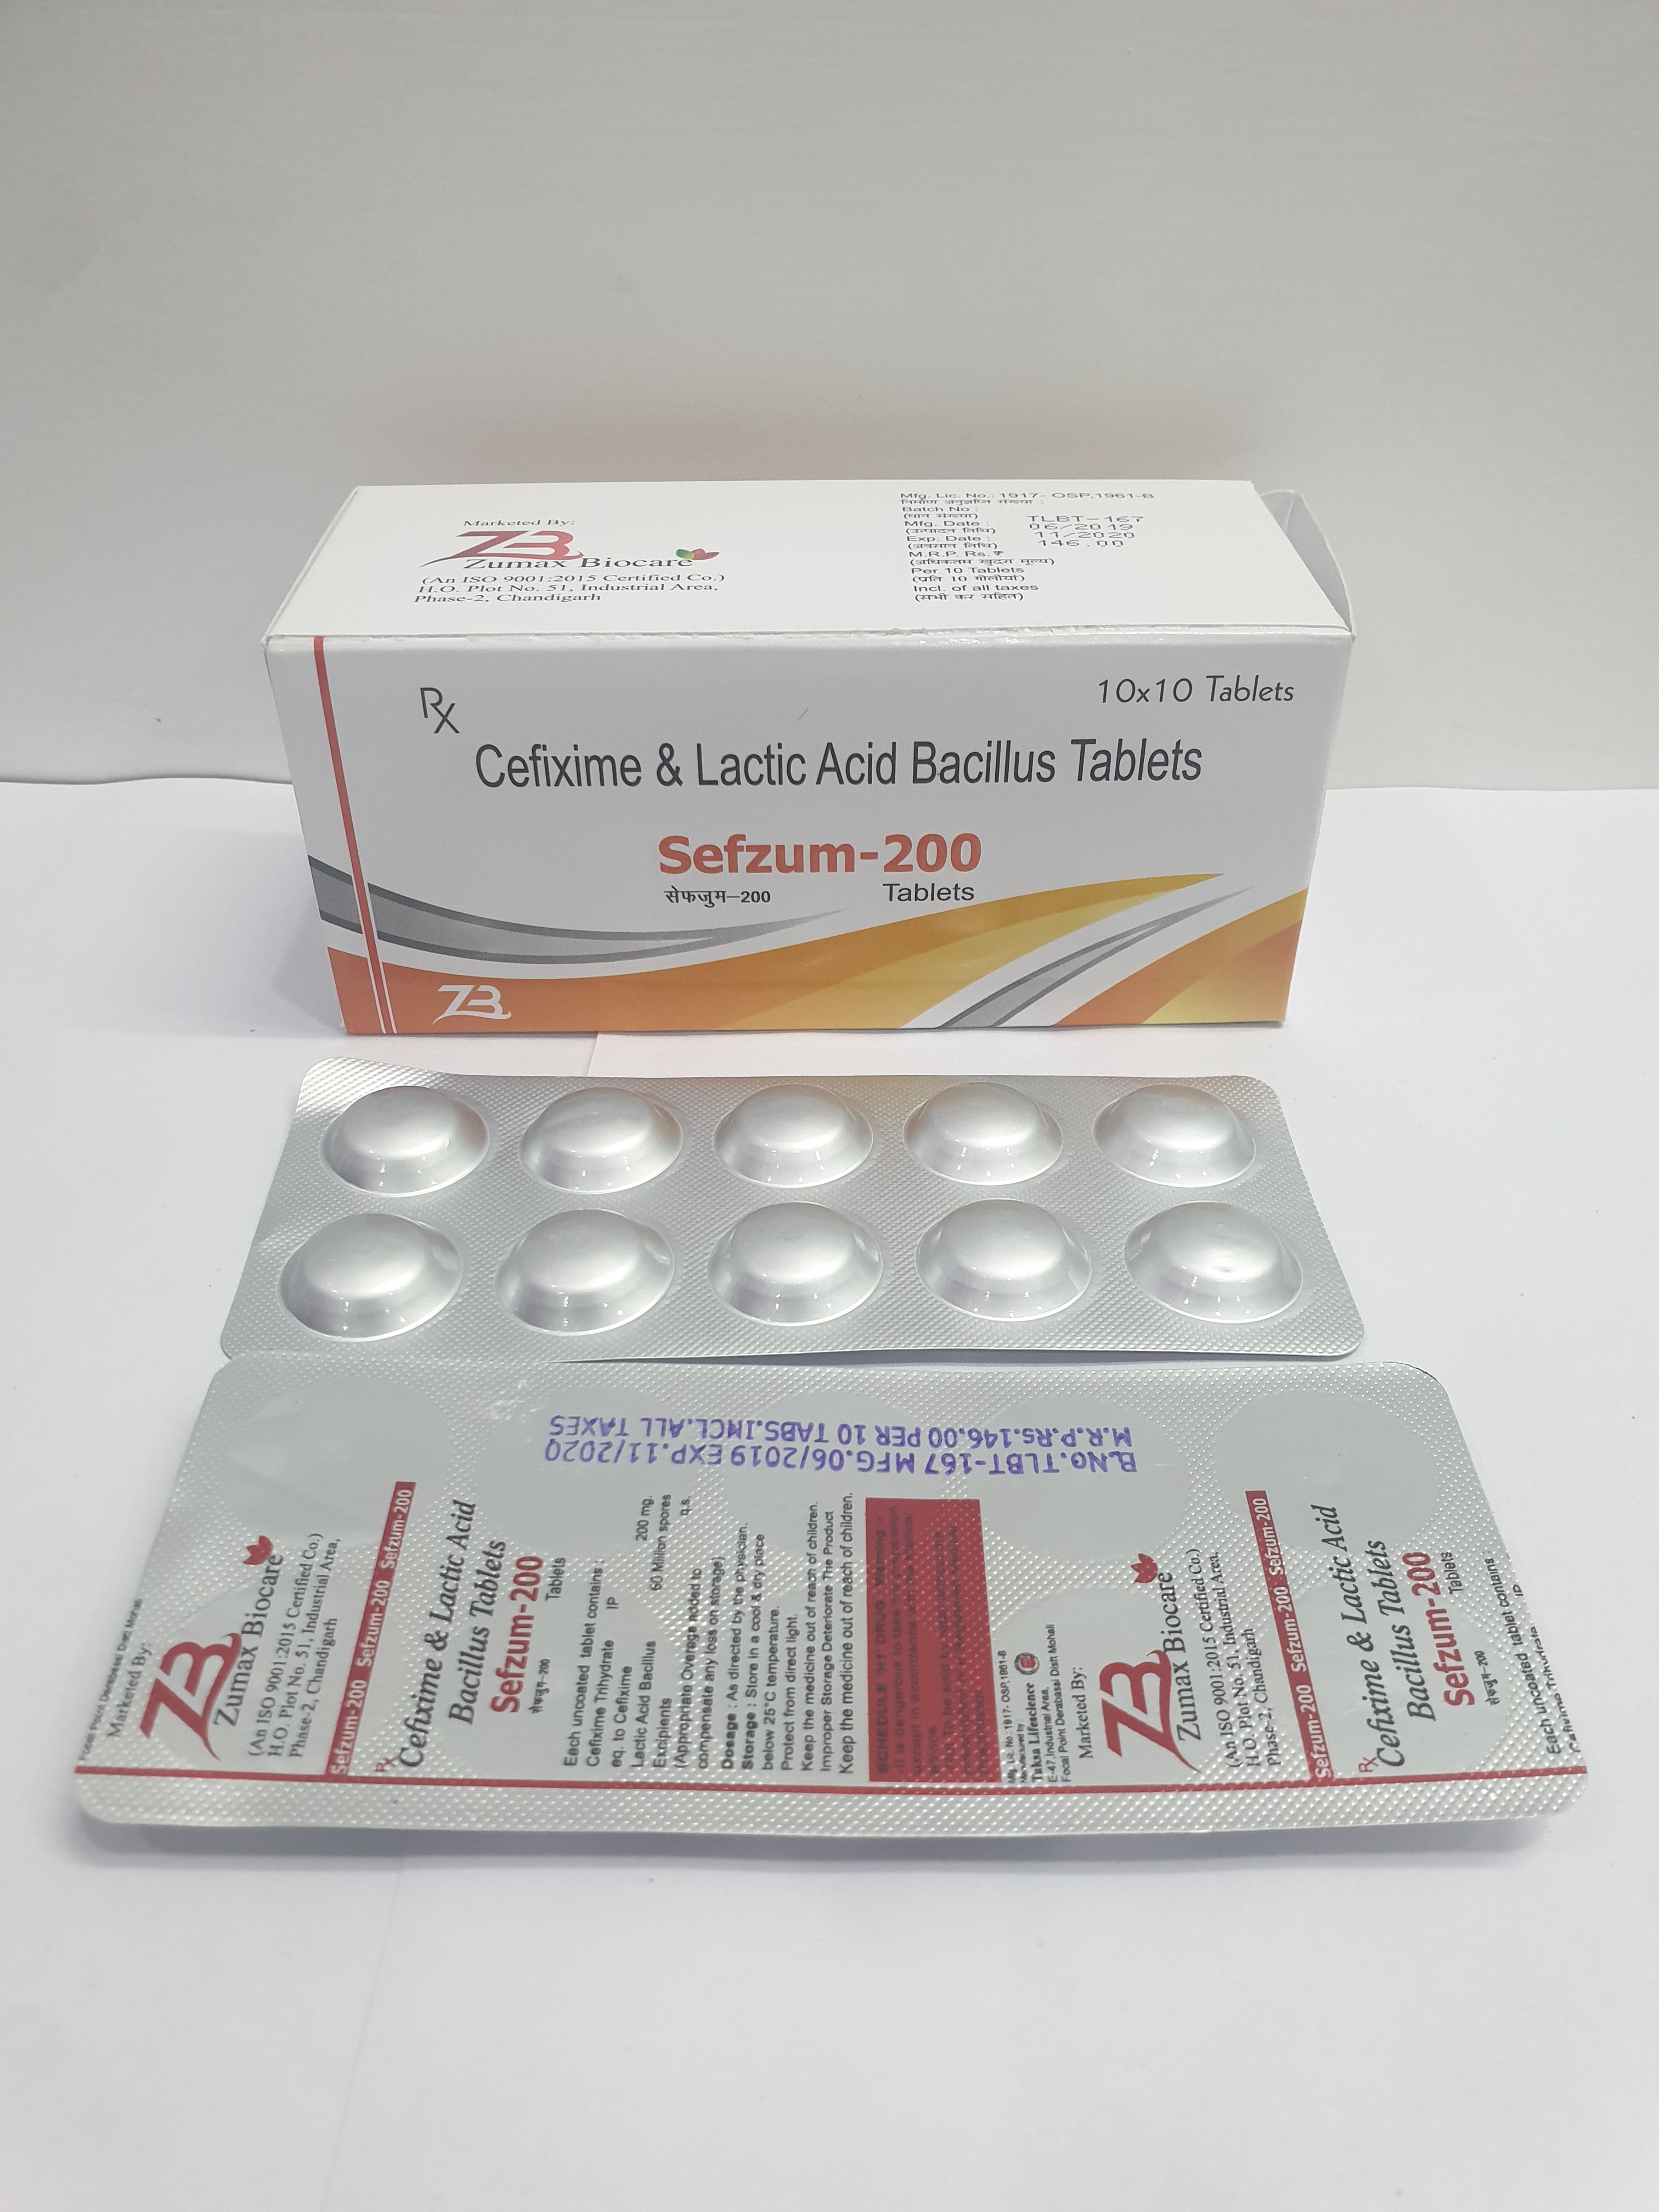 Product Name: Sefzum 200, Compositions of Sefzum 200 are Cefixime & Latic Acid  Bacillus Tablets - Zumax Biocare